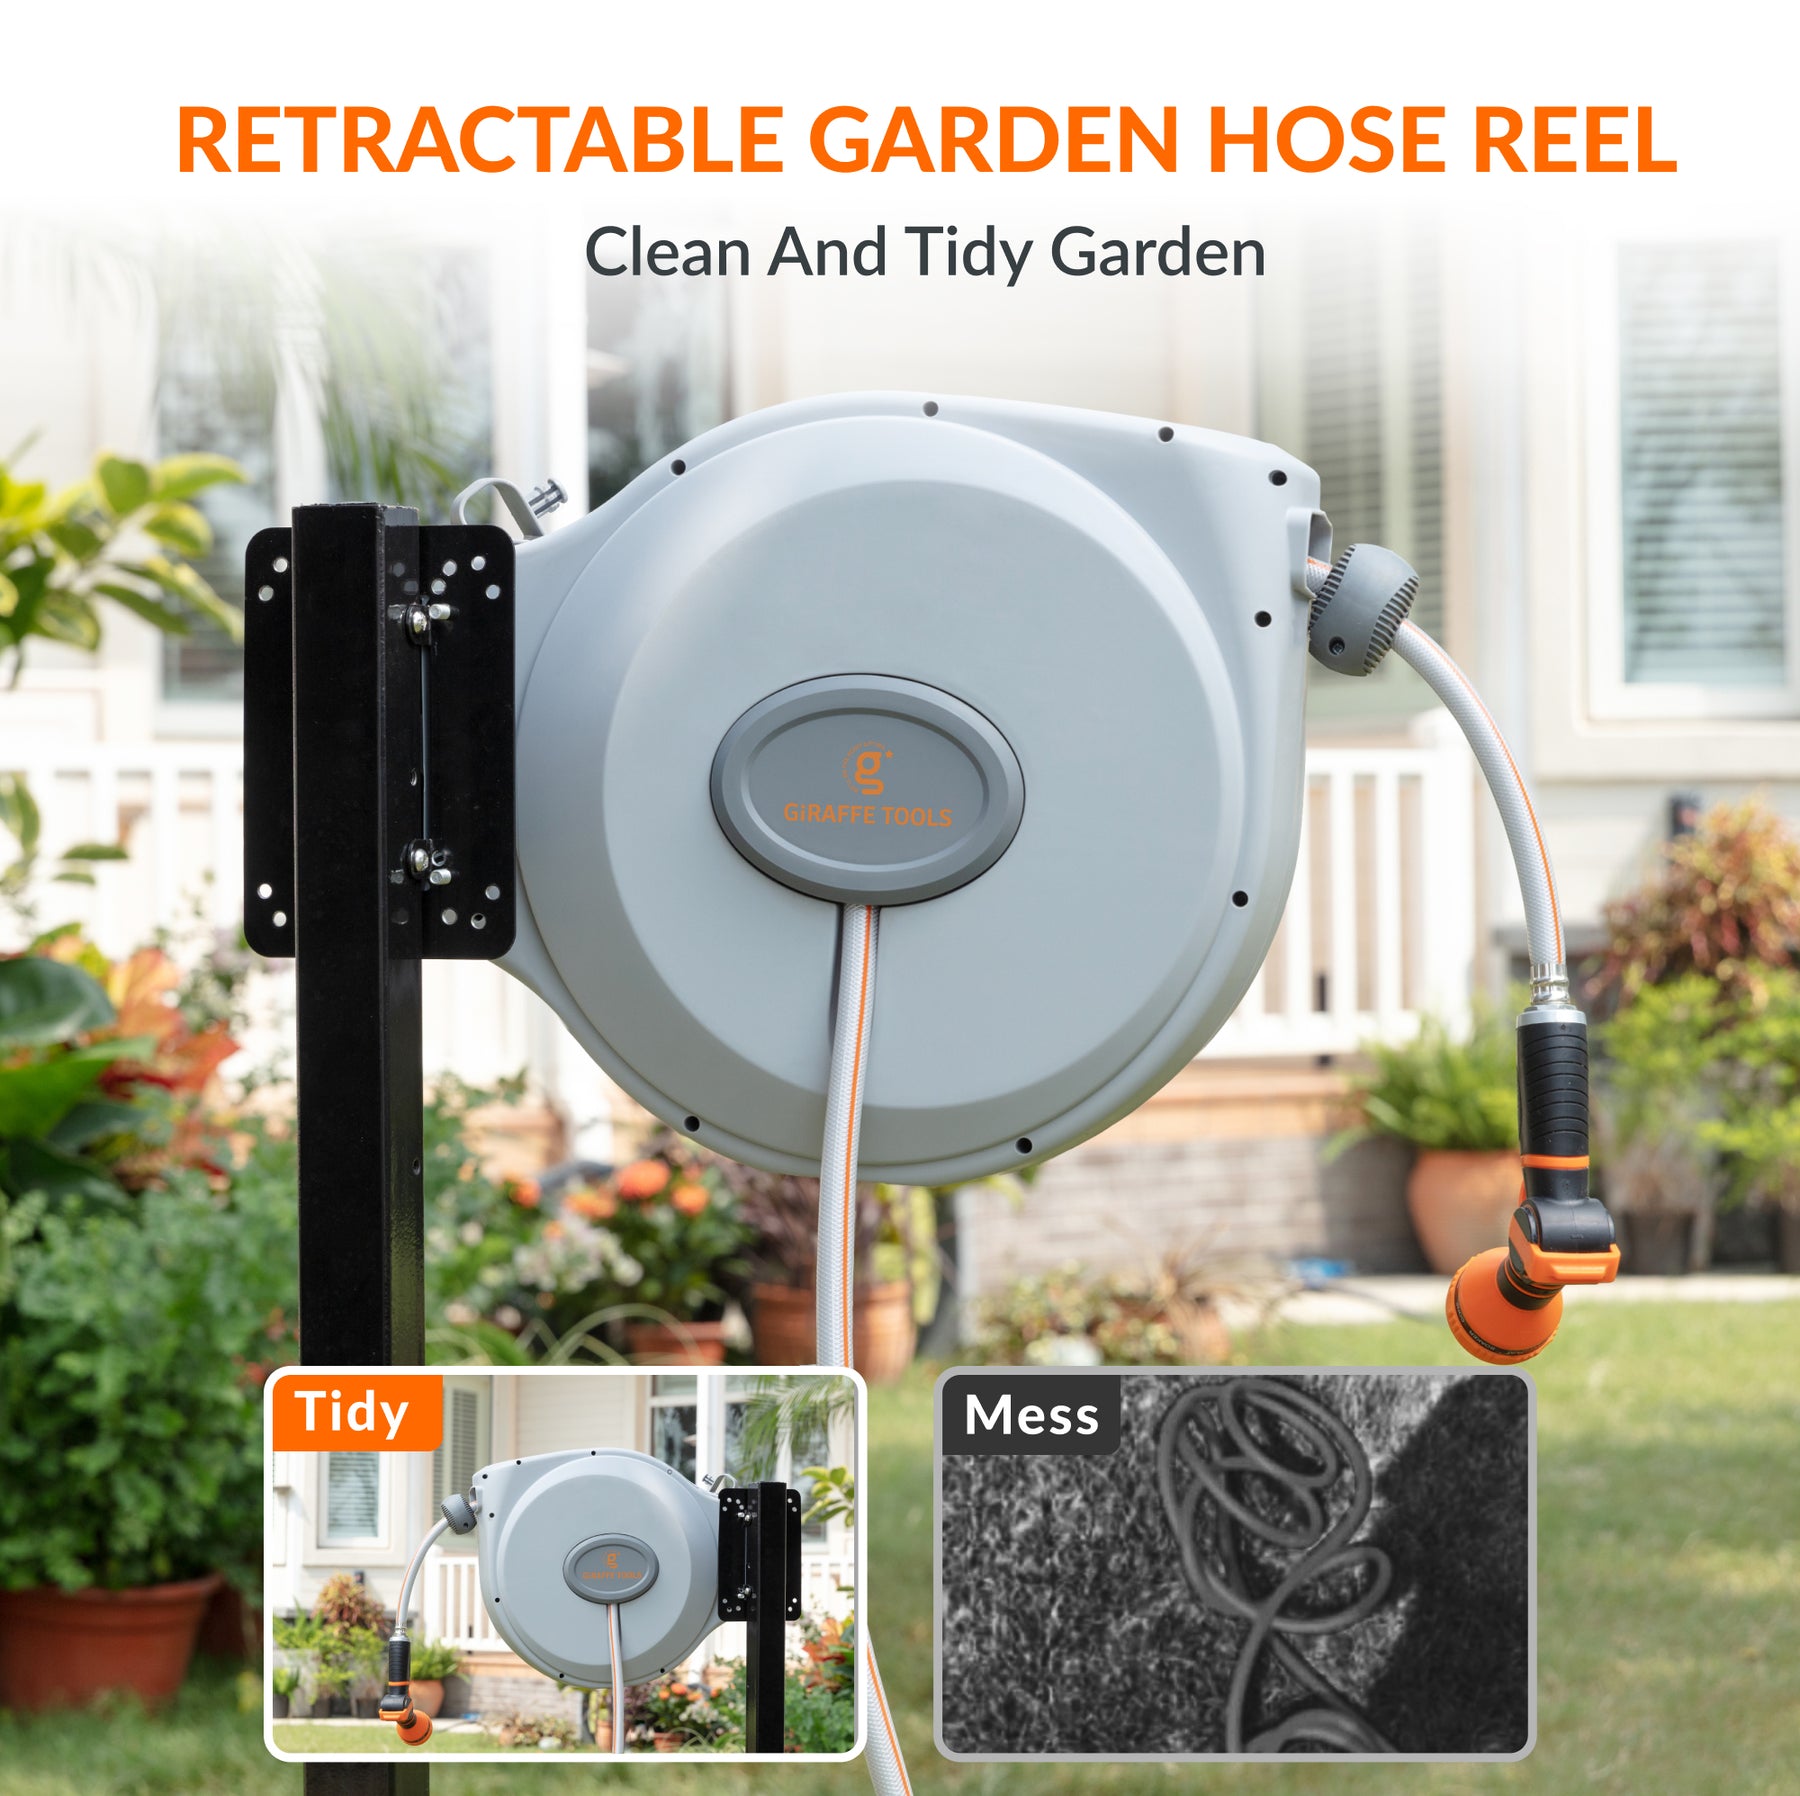 5/8 66ft Retractable Garden Hose Reel by BSTOKCAM, Hybrid Rubber Hose,  Water Hose Reels Automatic Rewind Storage, 10 Patterns Nozzle Included :  : Patio, Lawn & Garden